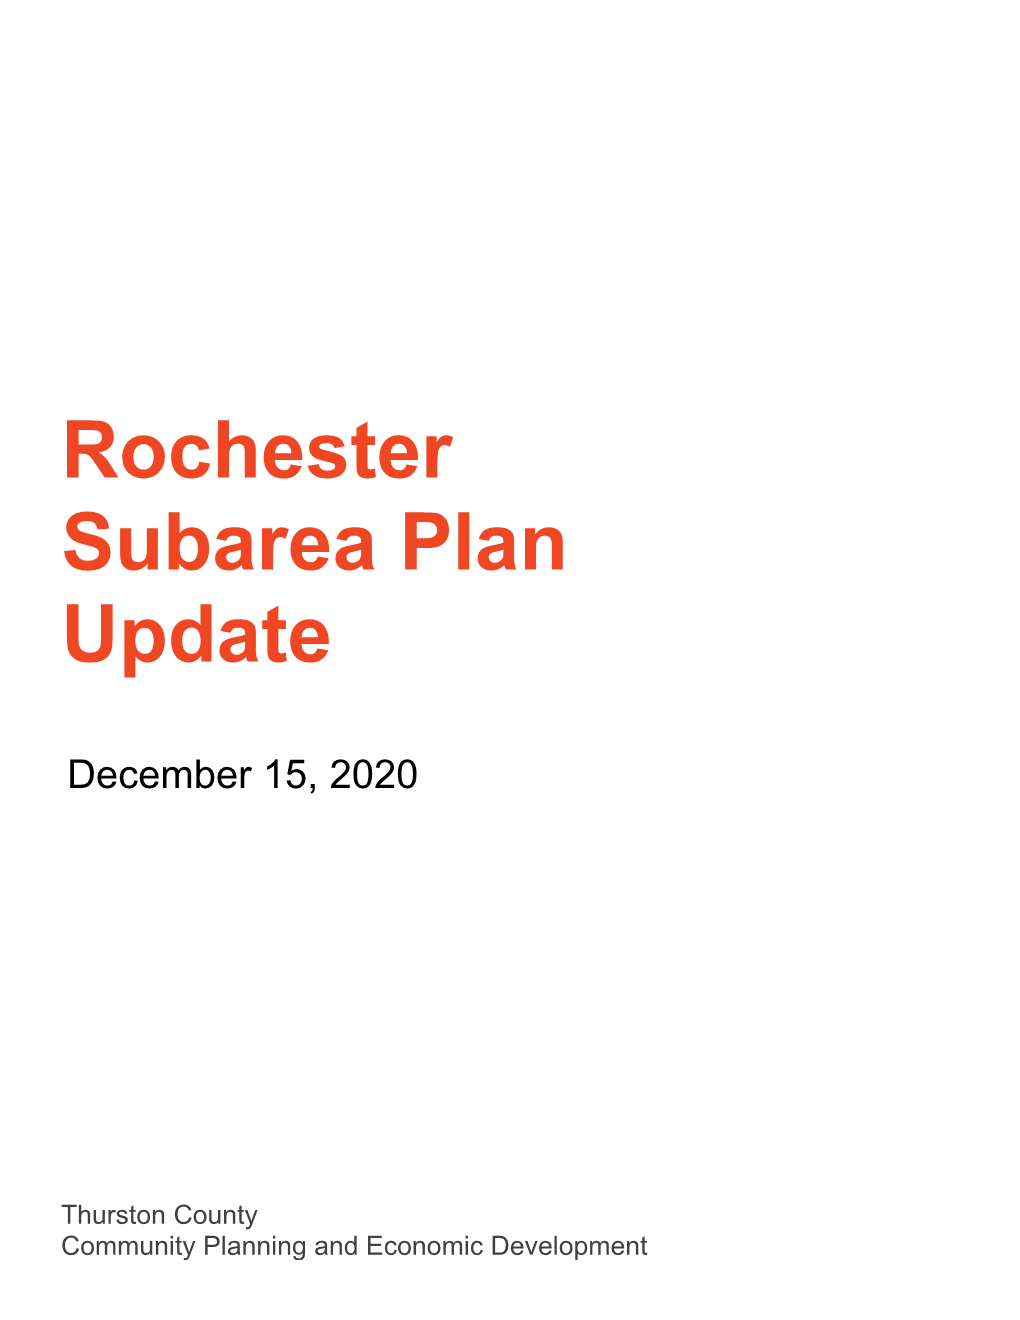 Rochester Subarea Plan Update